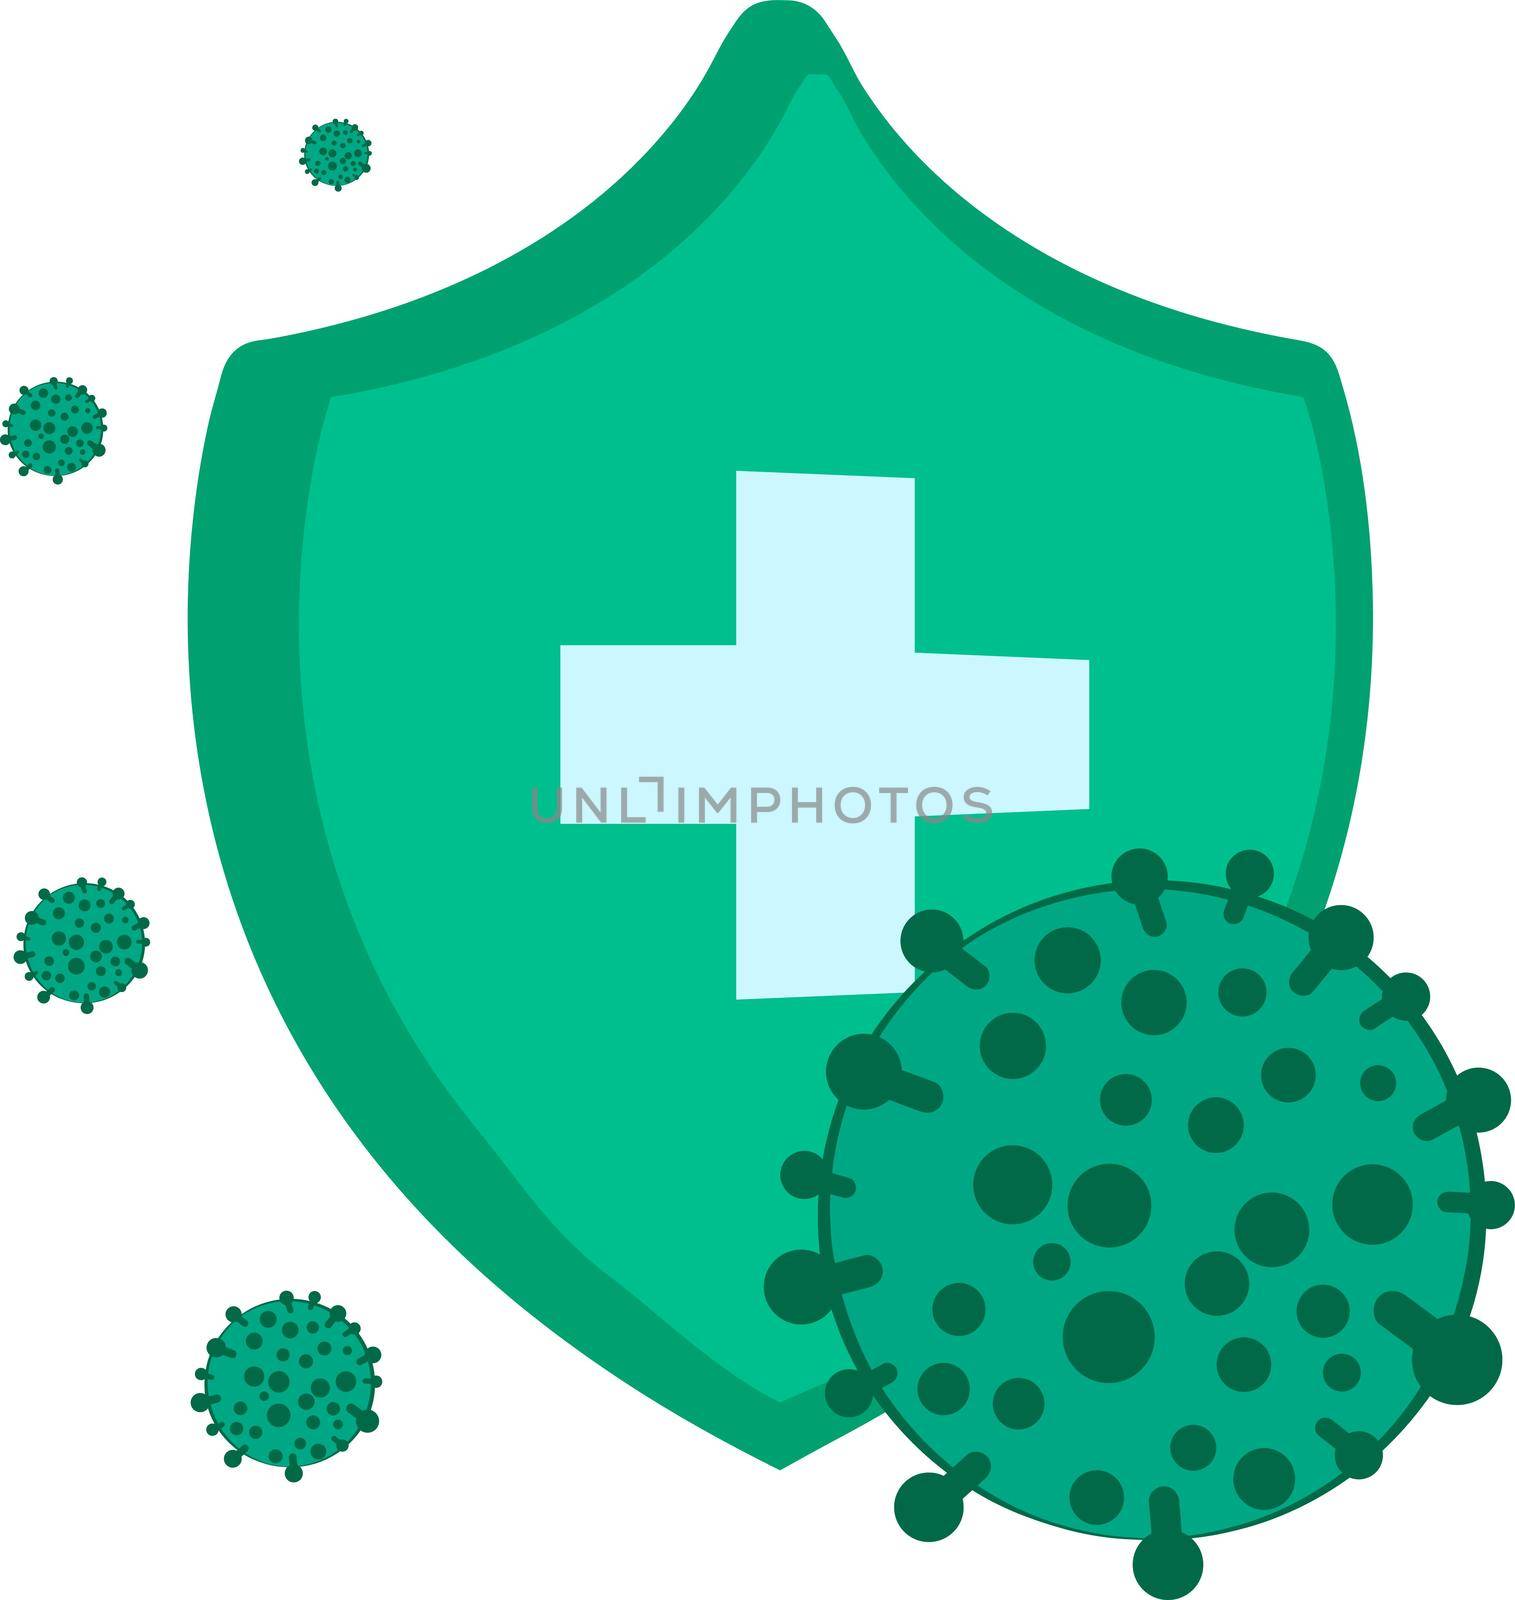 Antivirus shield and coronavirus sign vector illustration by Olena758